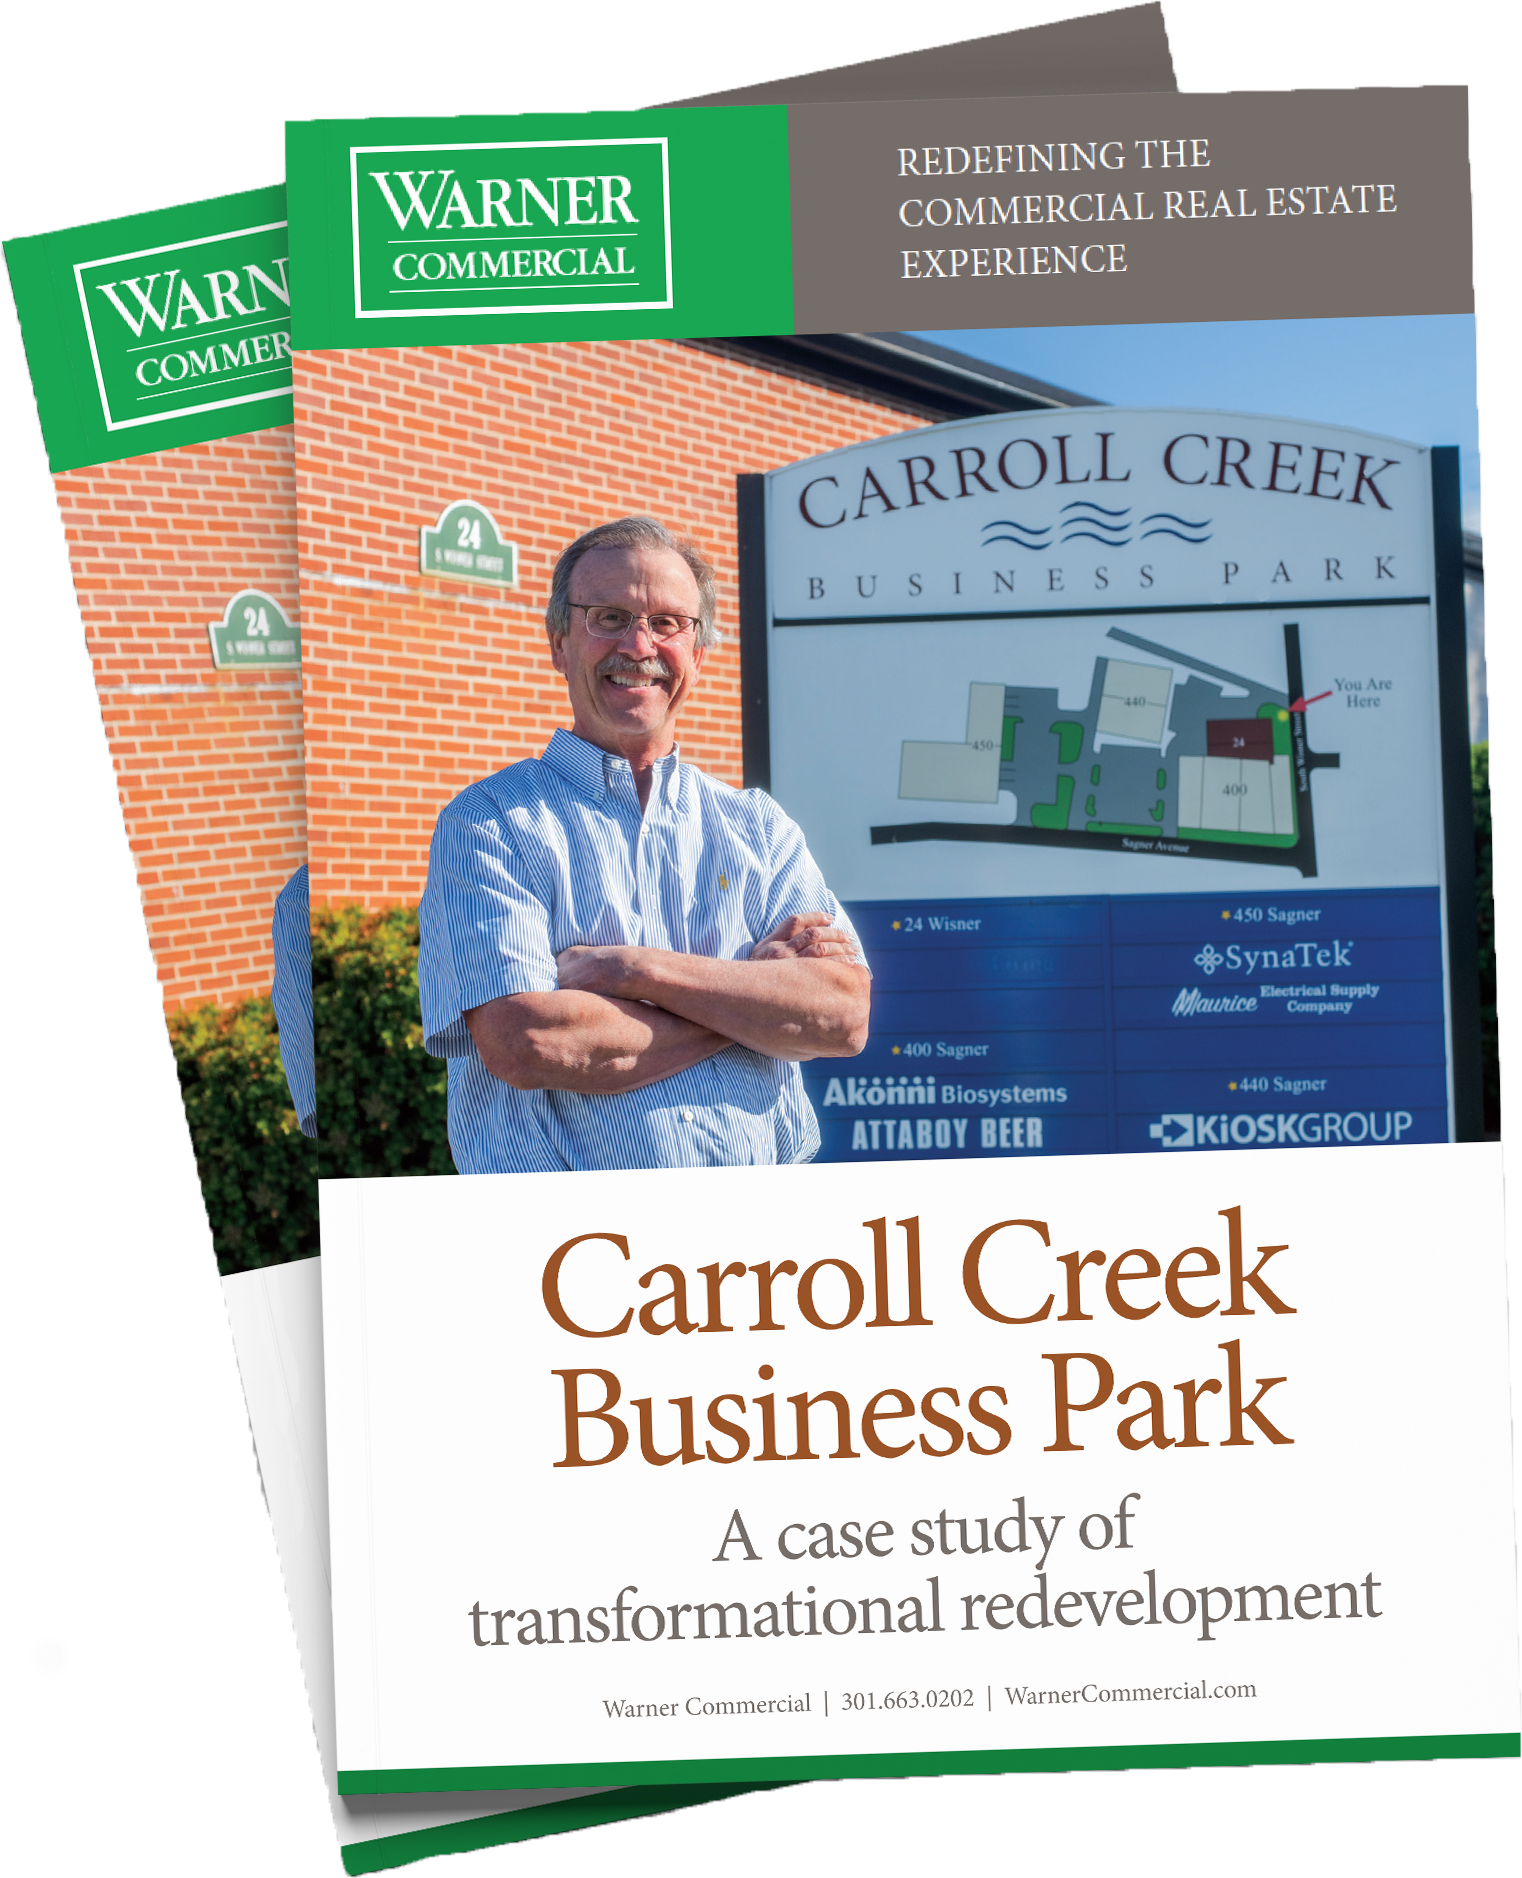 Carroll Creek Business Park case study download.